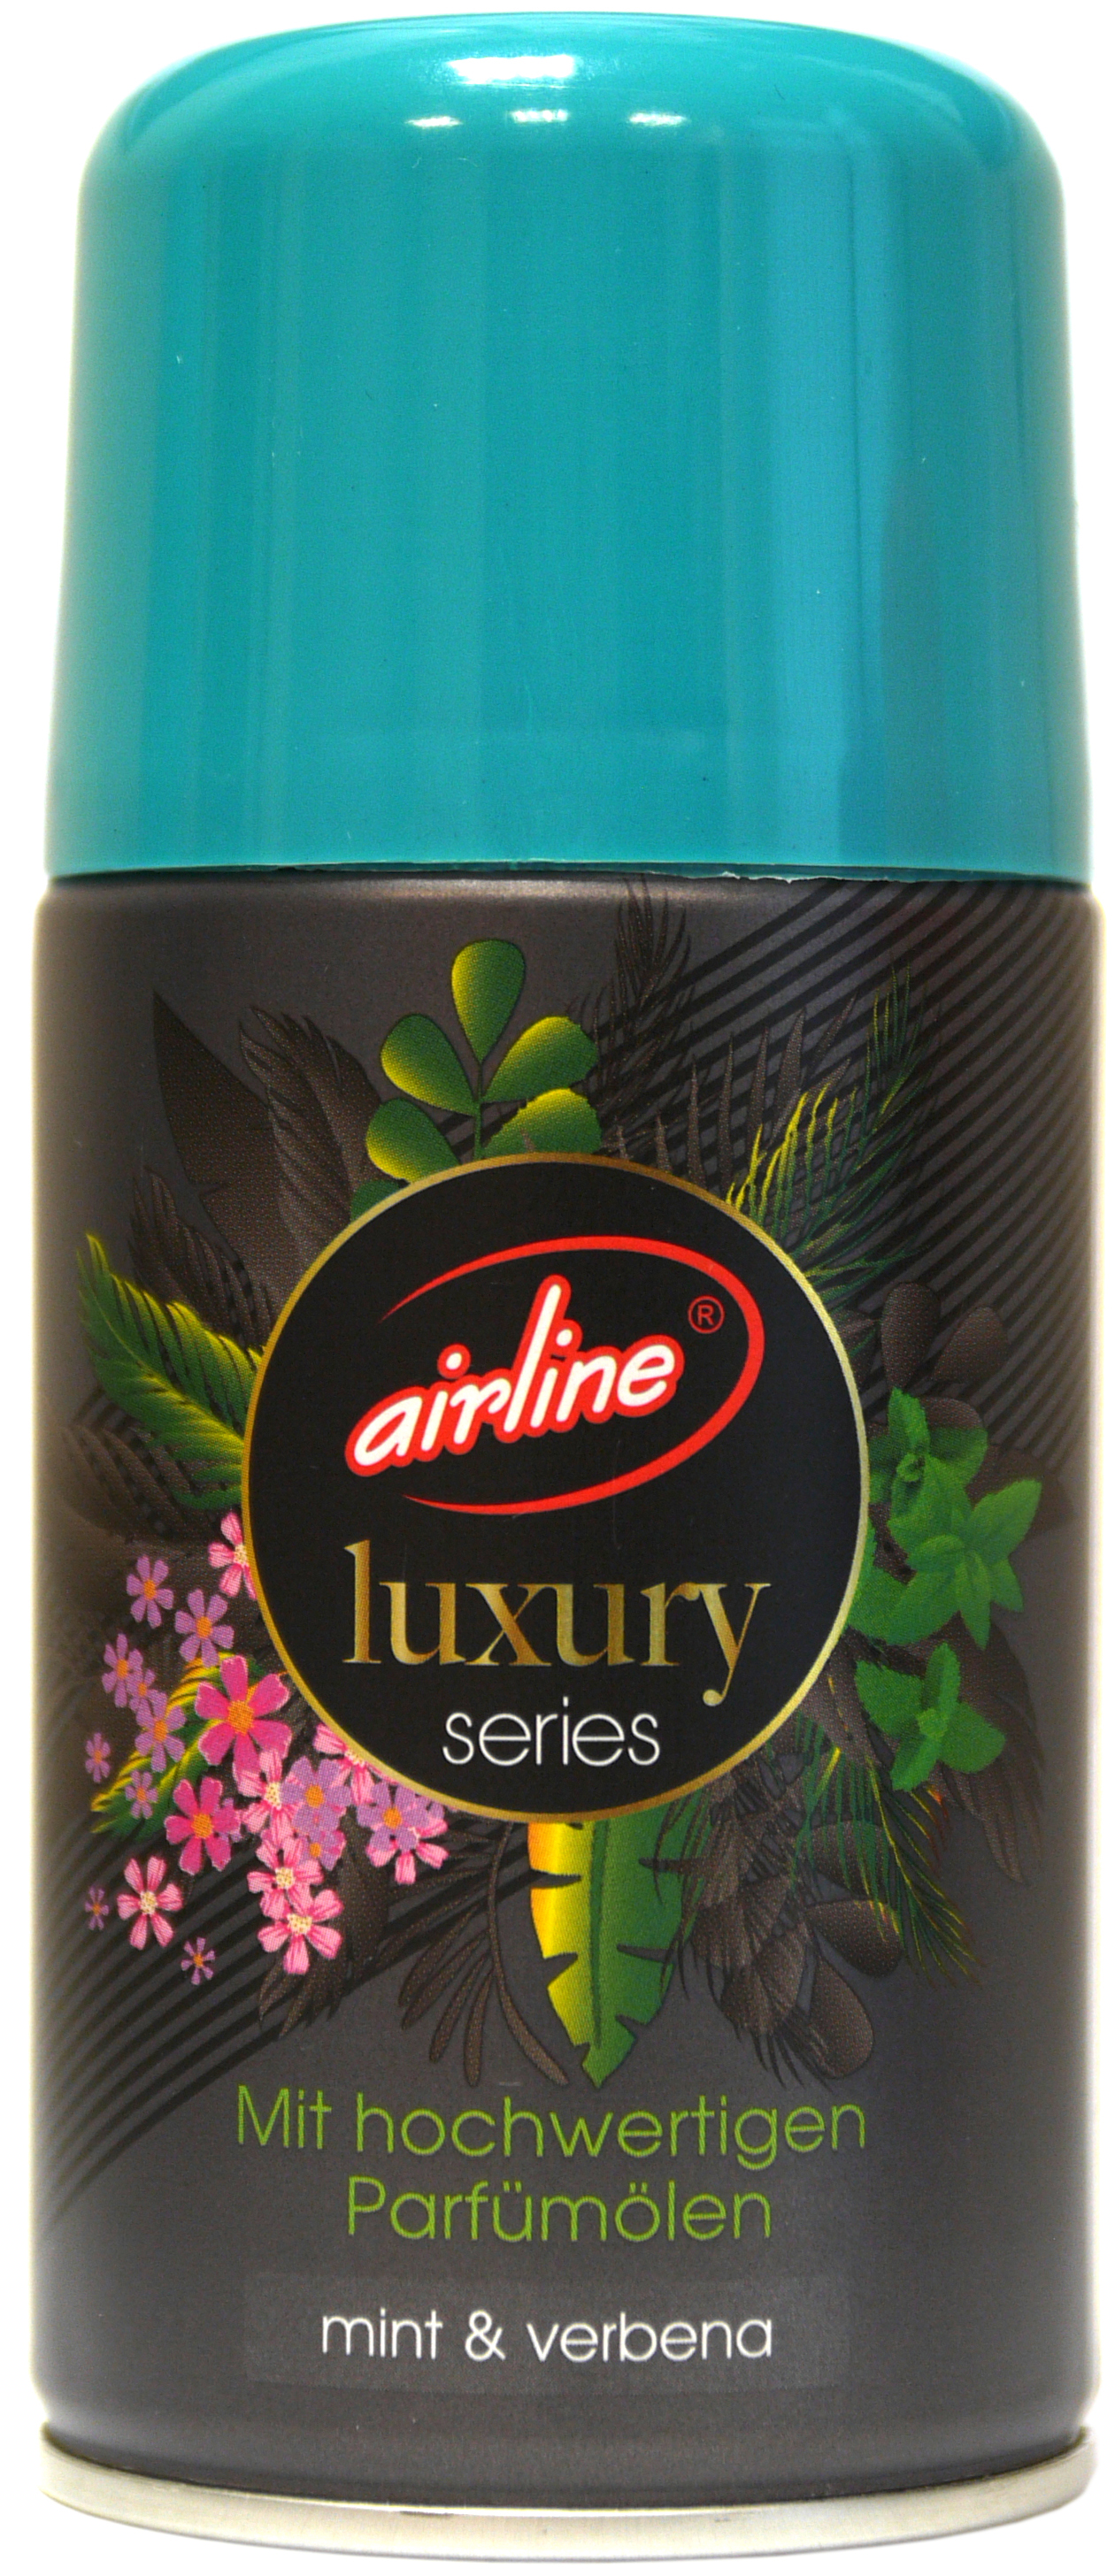 00521 - Luxury series mint & verbena refill 250 ml